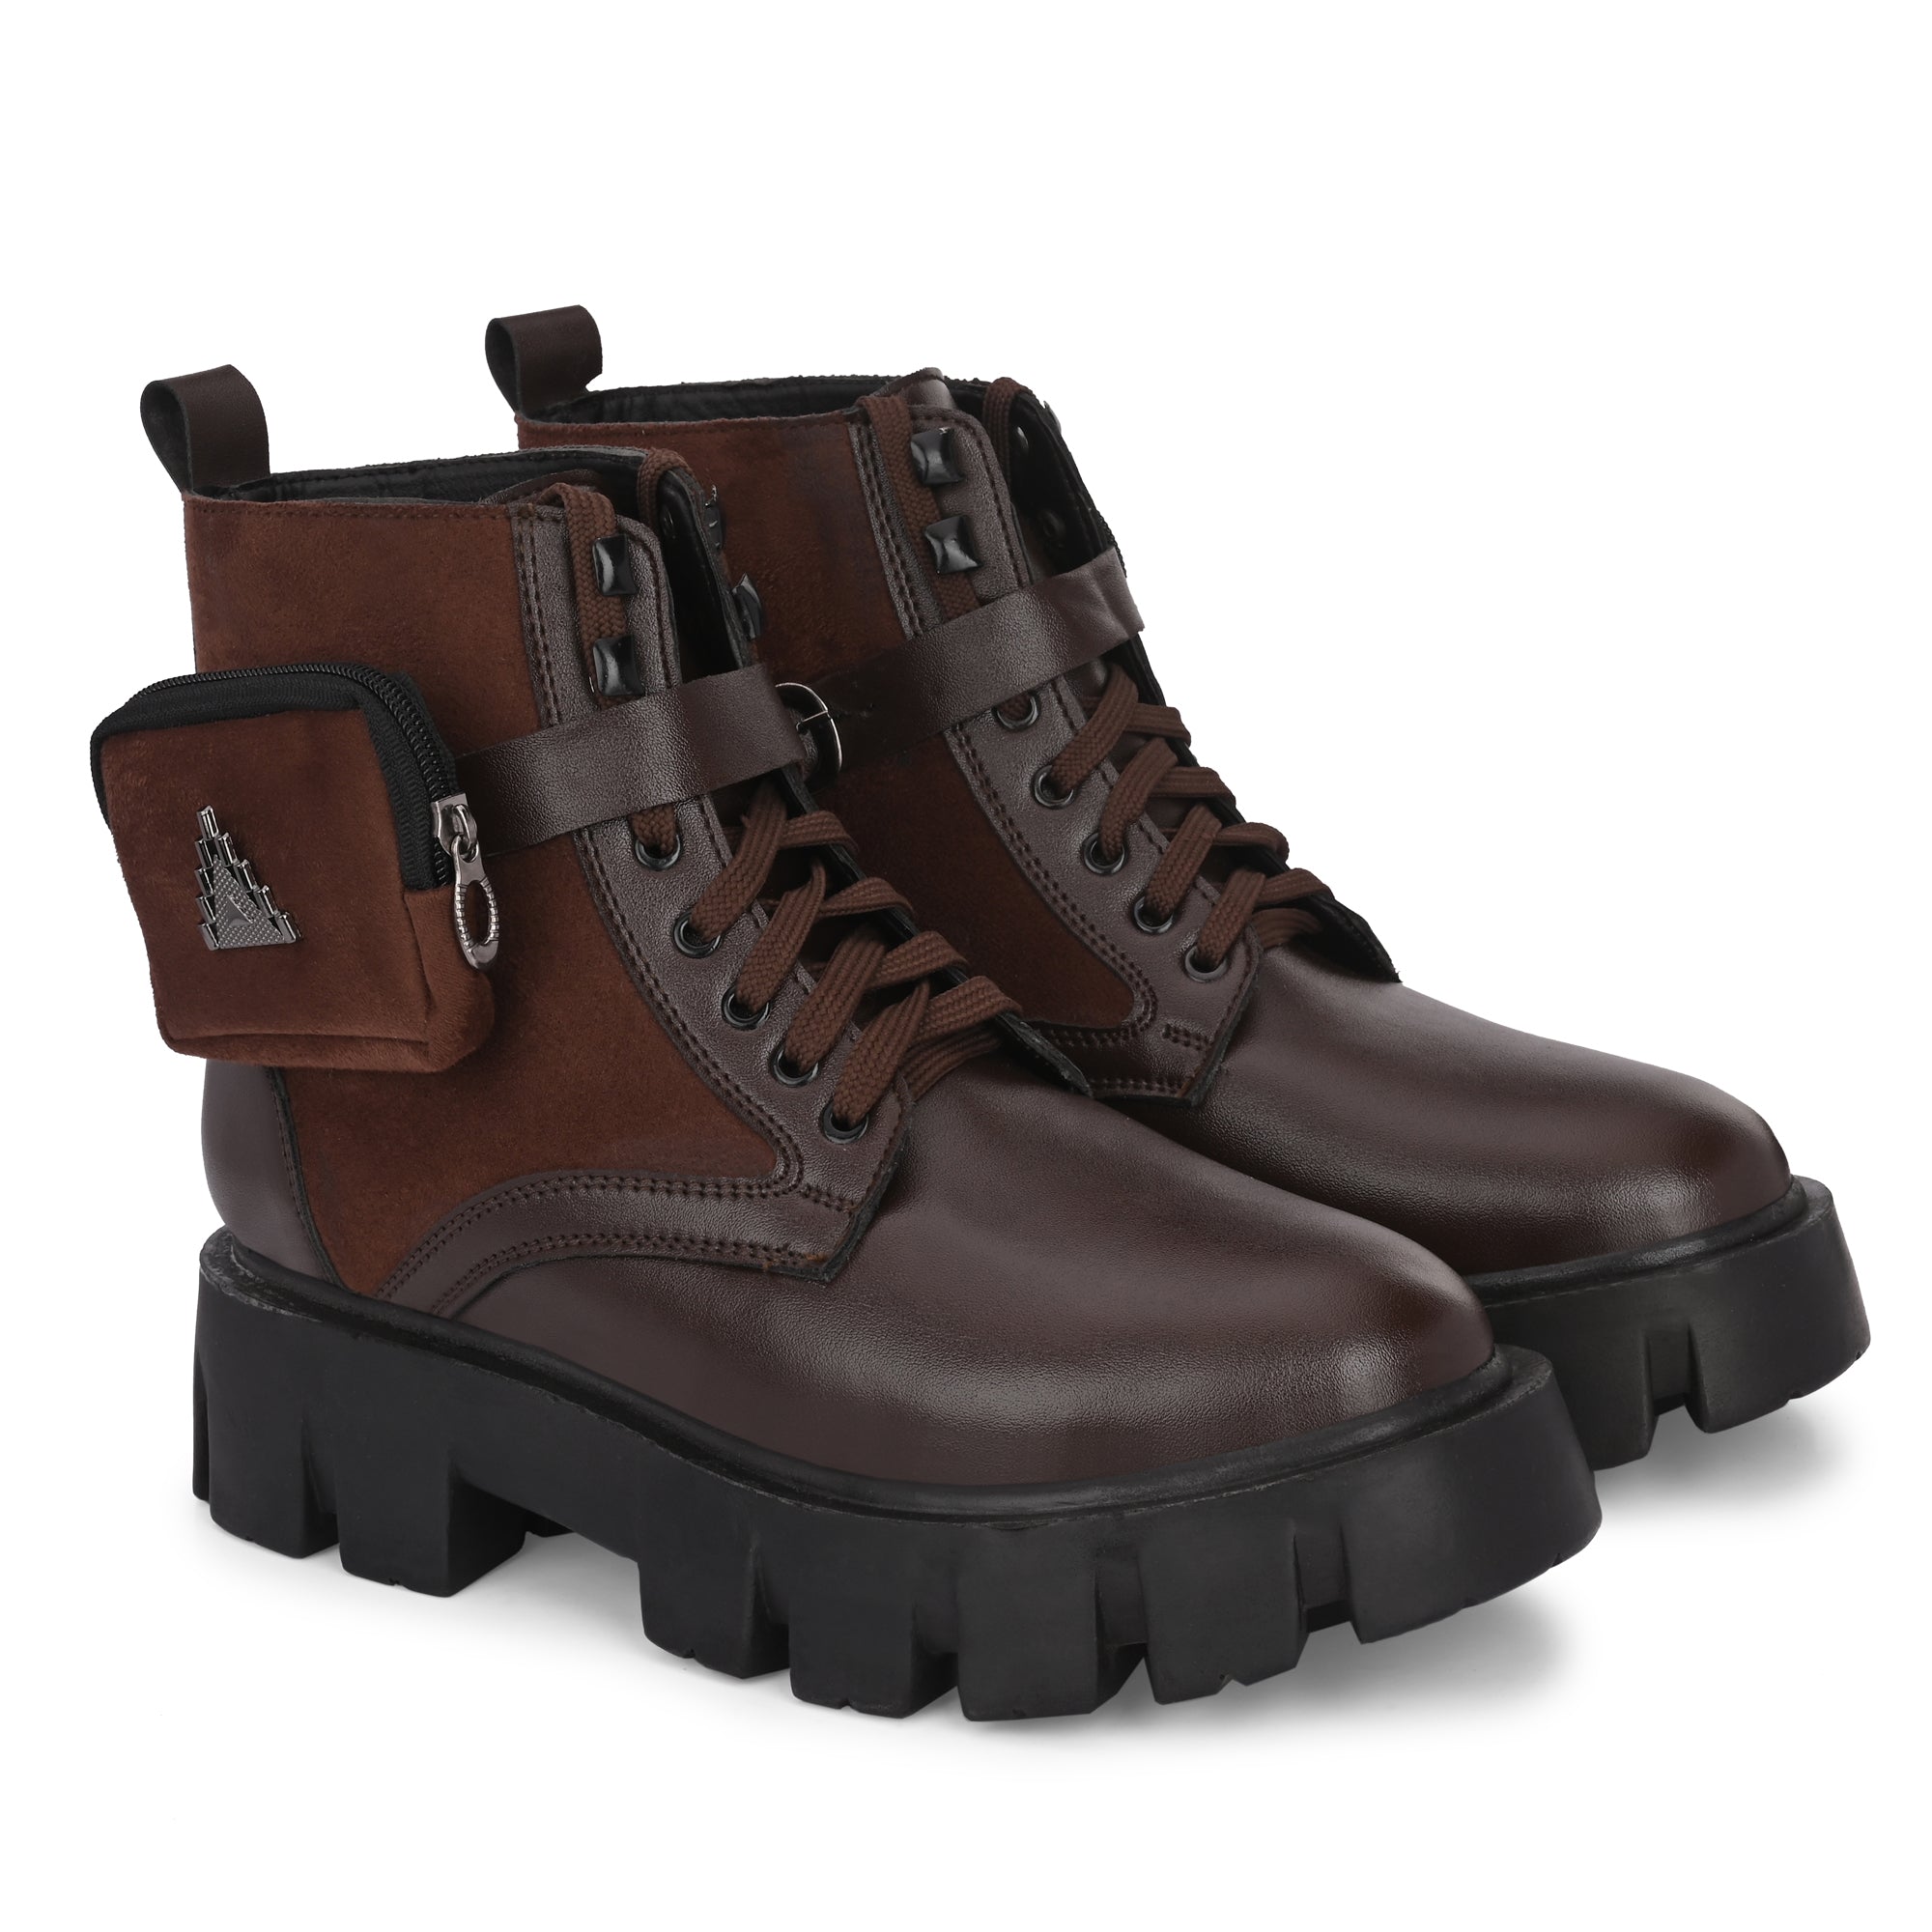 ZiGi Girl “Z - Jo” Leather High Heel Combat Boots | High heel combat boots,  Boots, Leather high heels